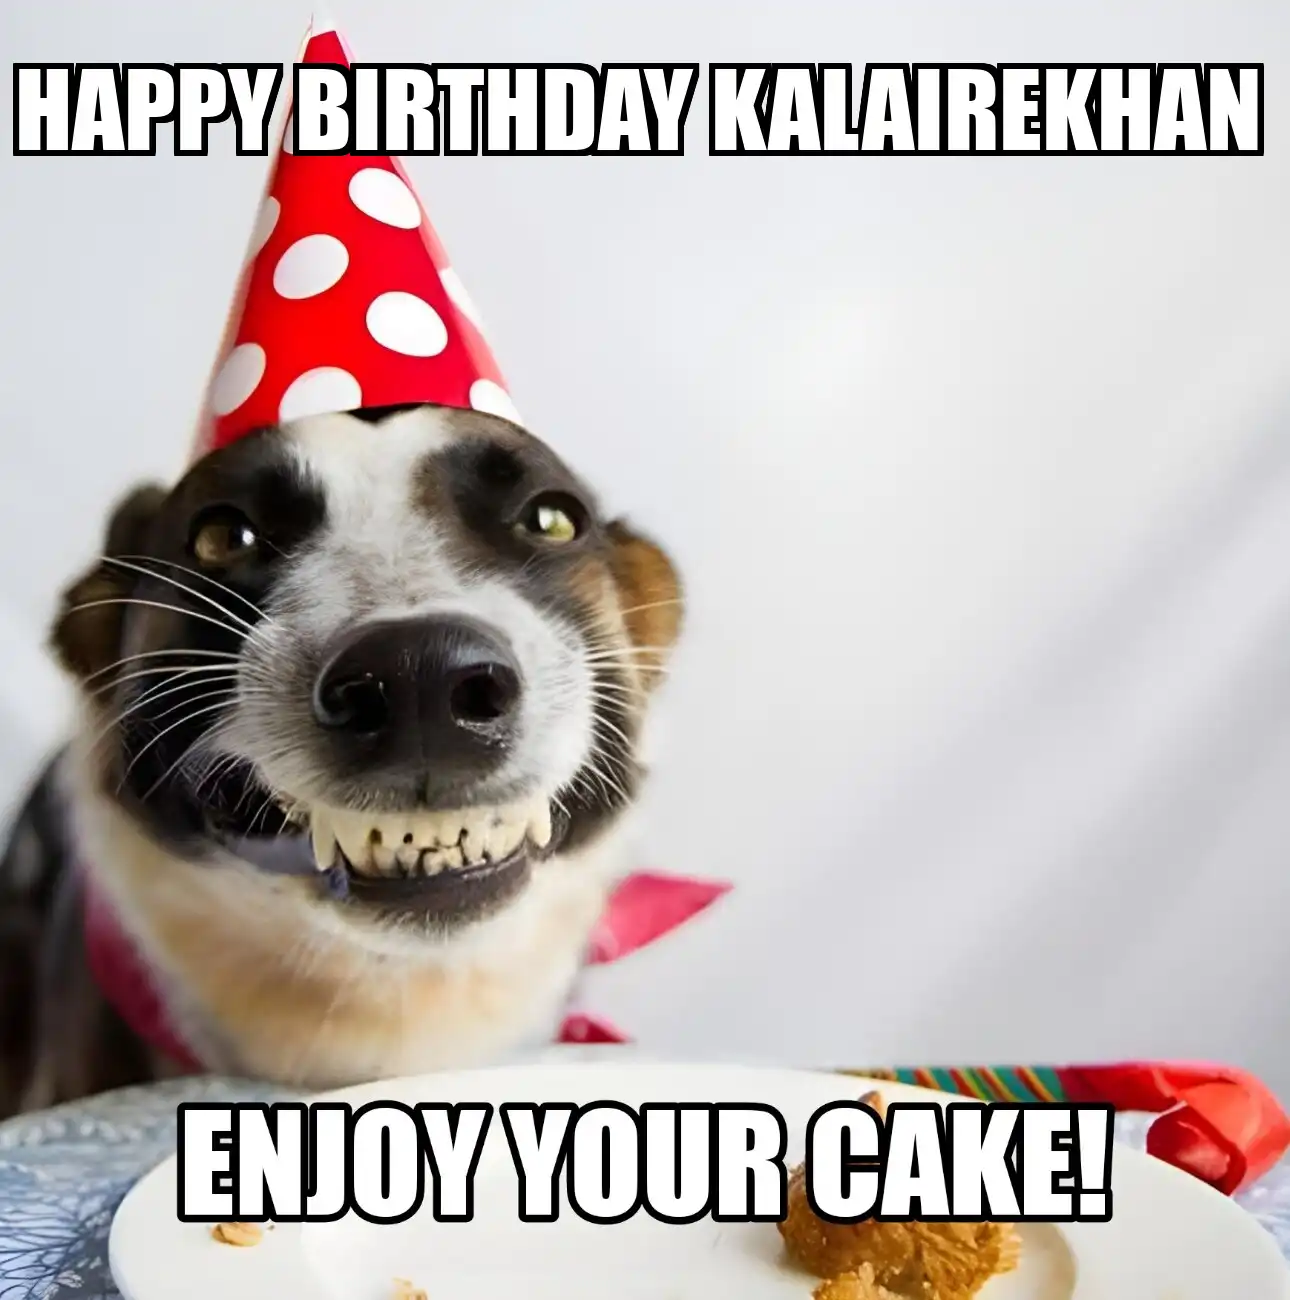 Happy Birthday Kalairekhan Enjoy Your Cake Dog Meme